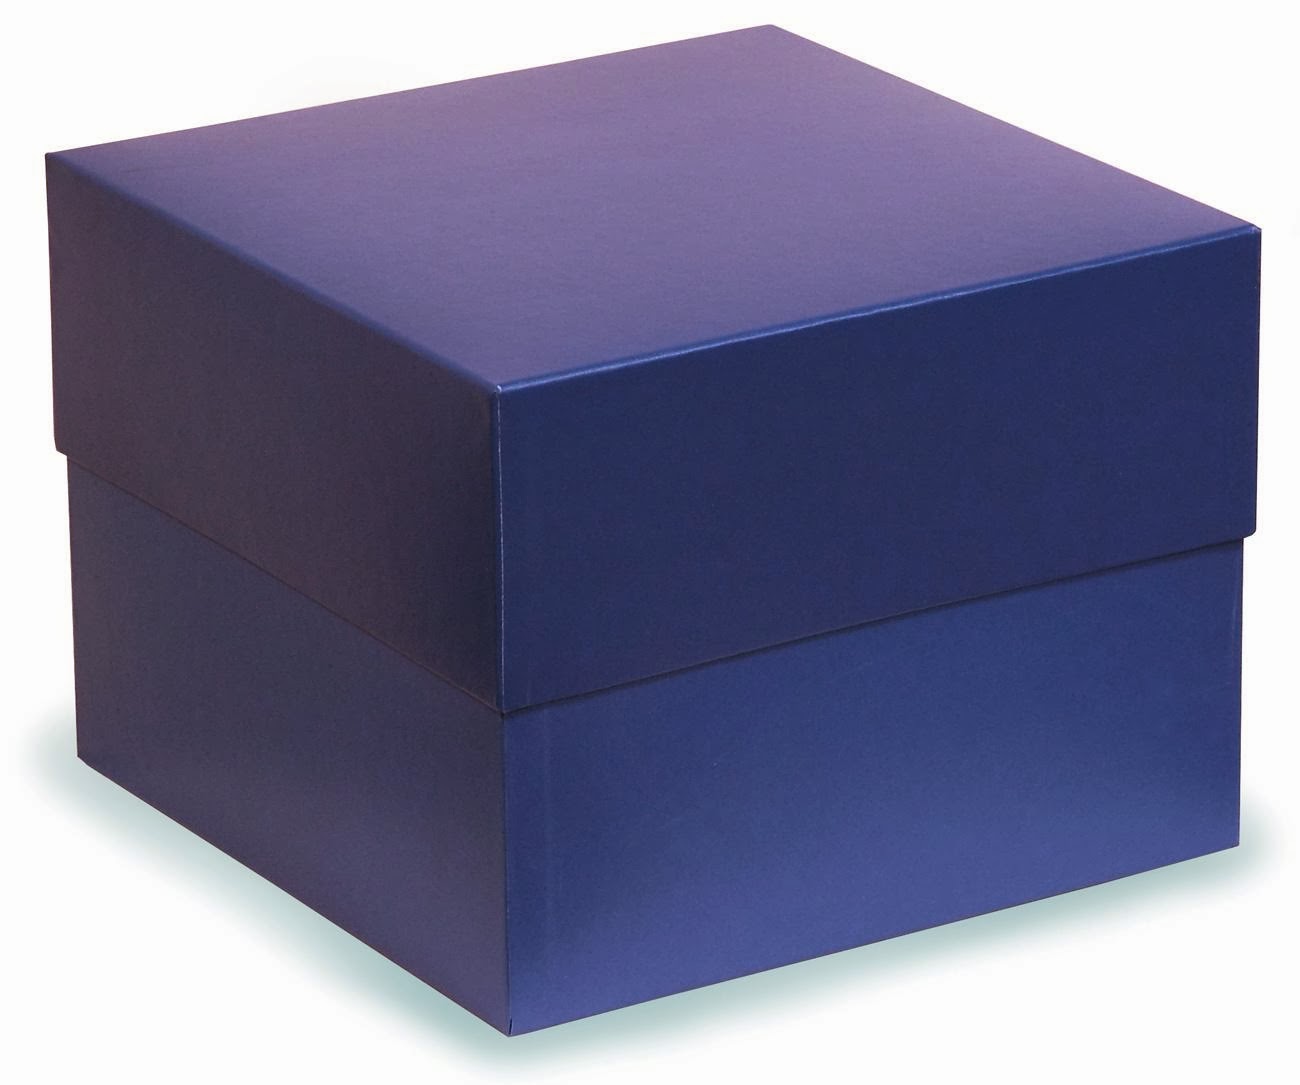 Box. Голубая коробка. Коробочка синяя. Коробка синего цвета. Синяя коробка квадратная.